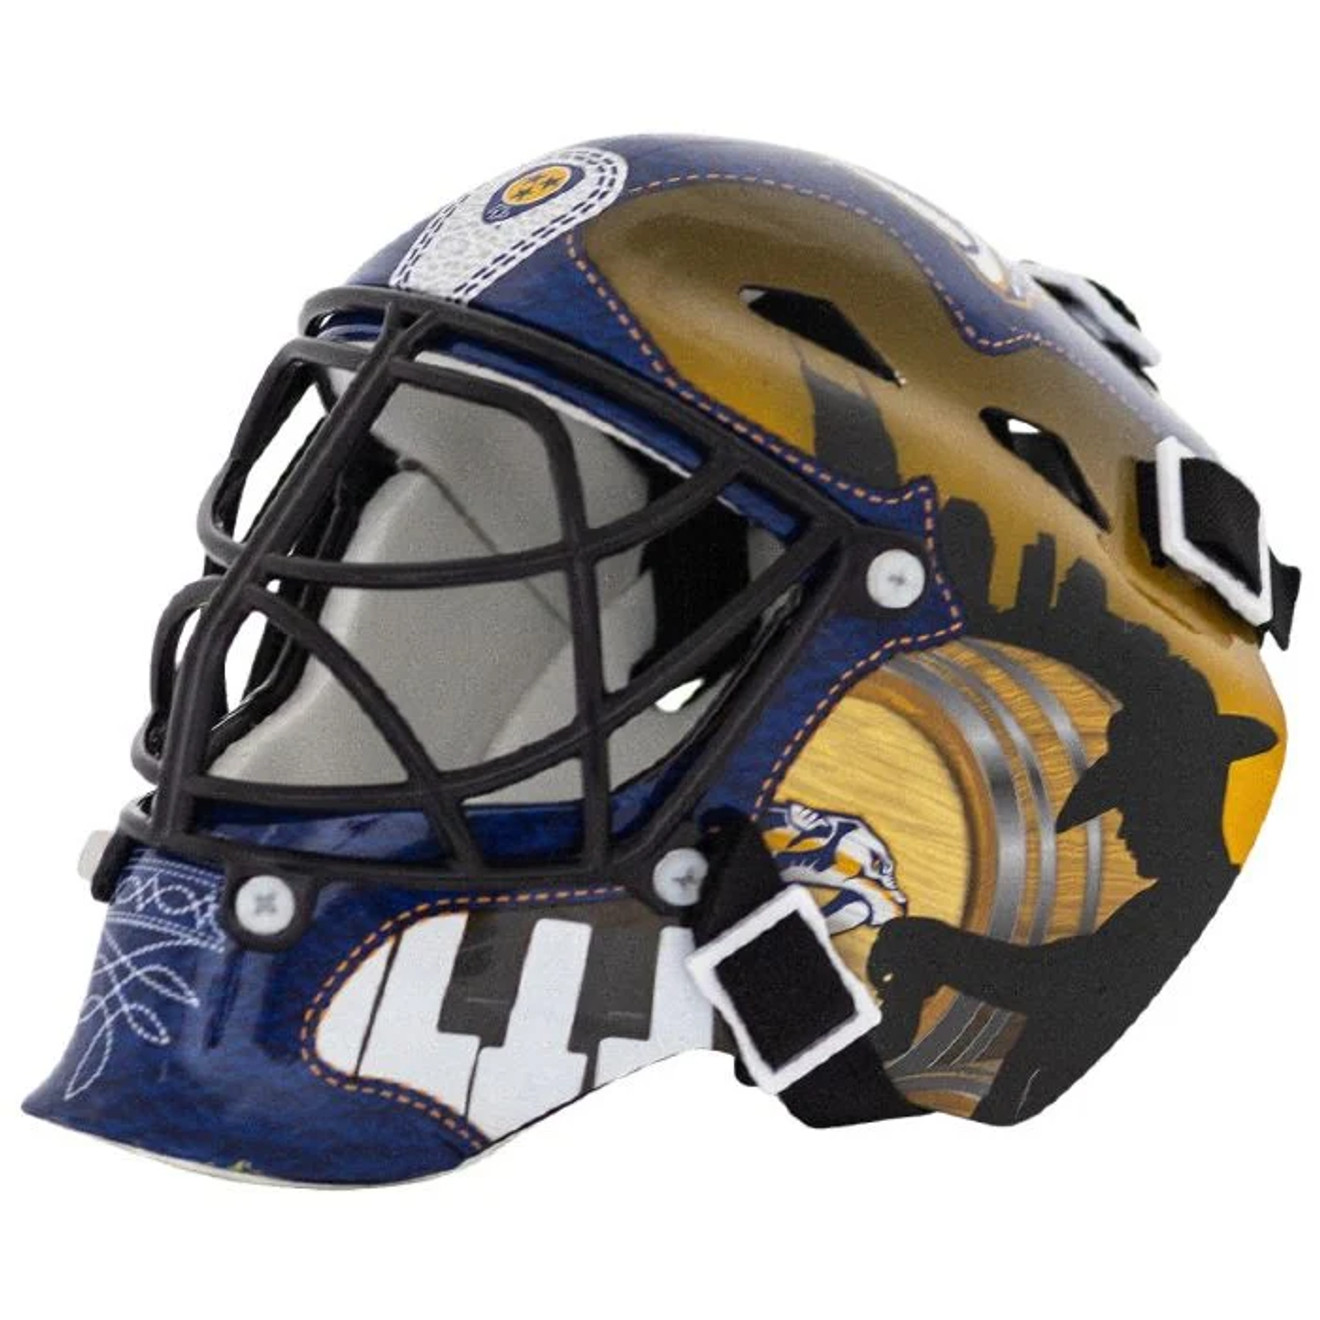 Nashville Predators Mini Goalie Helmet